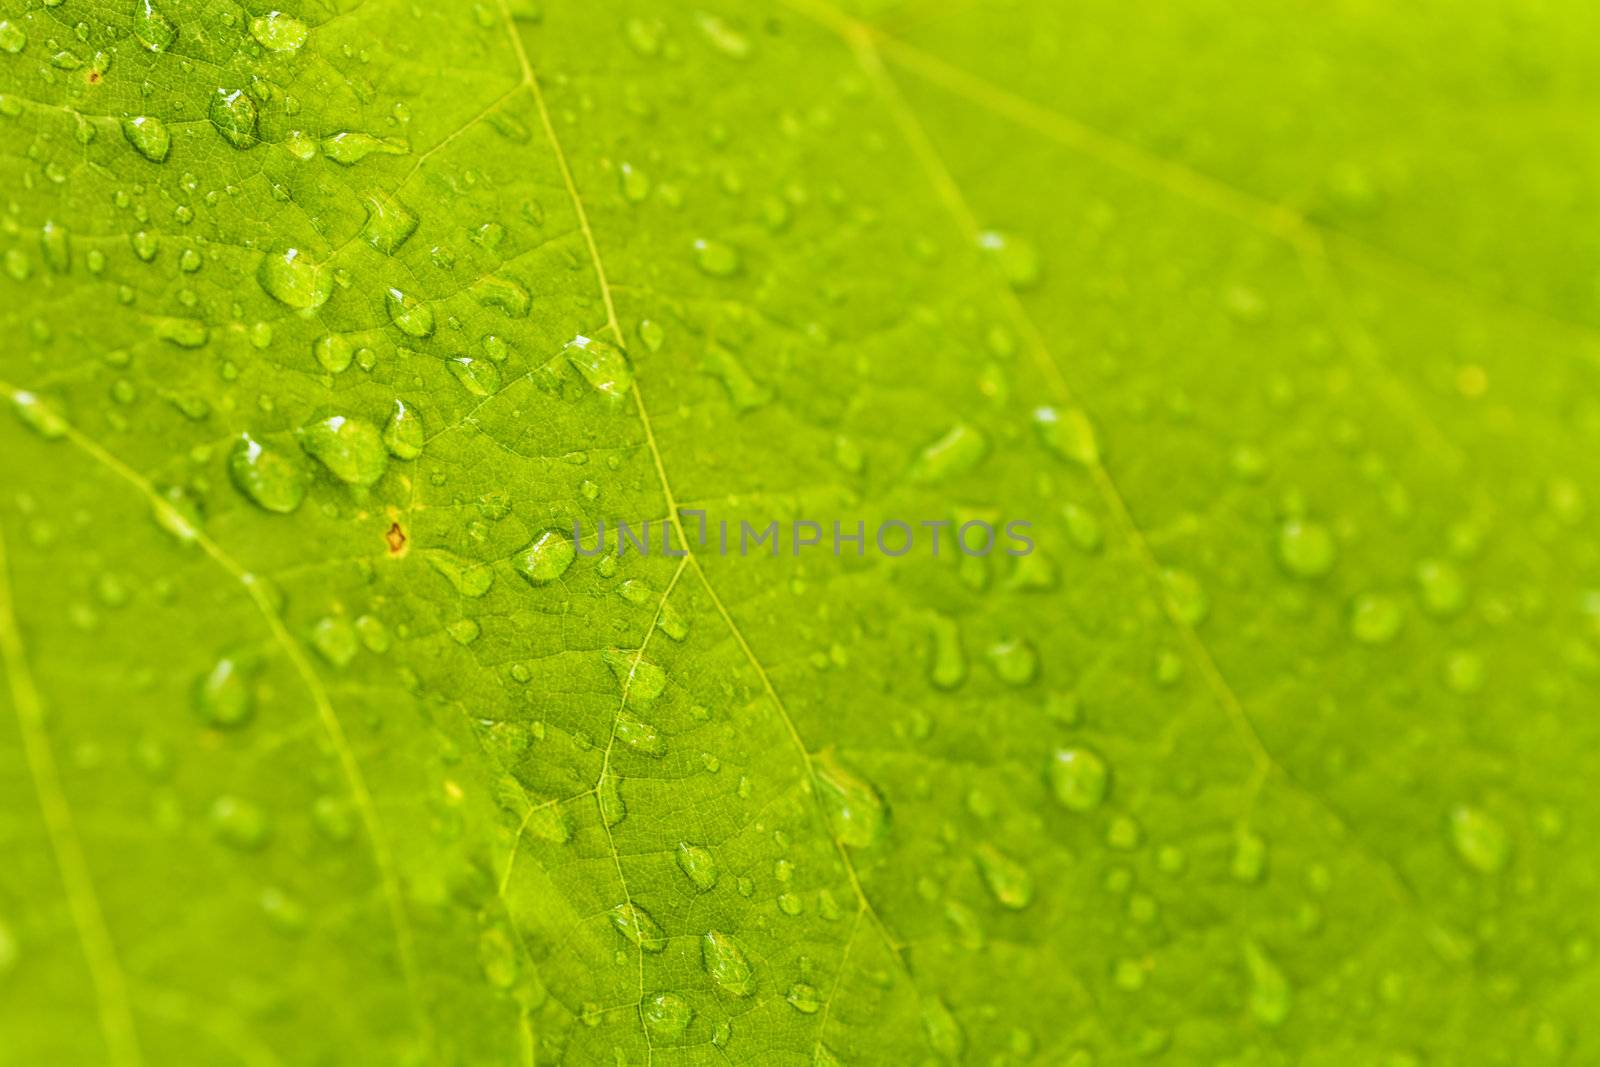 pure rain drops on a green leaf